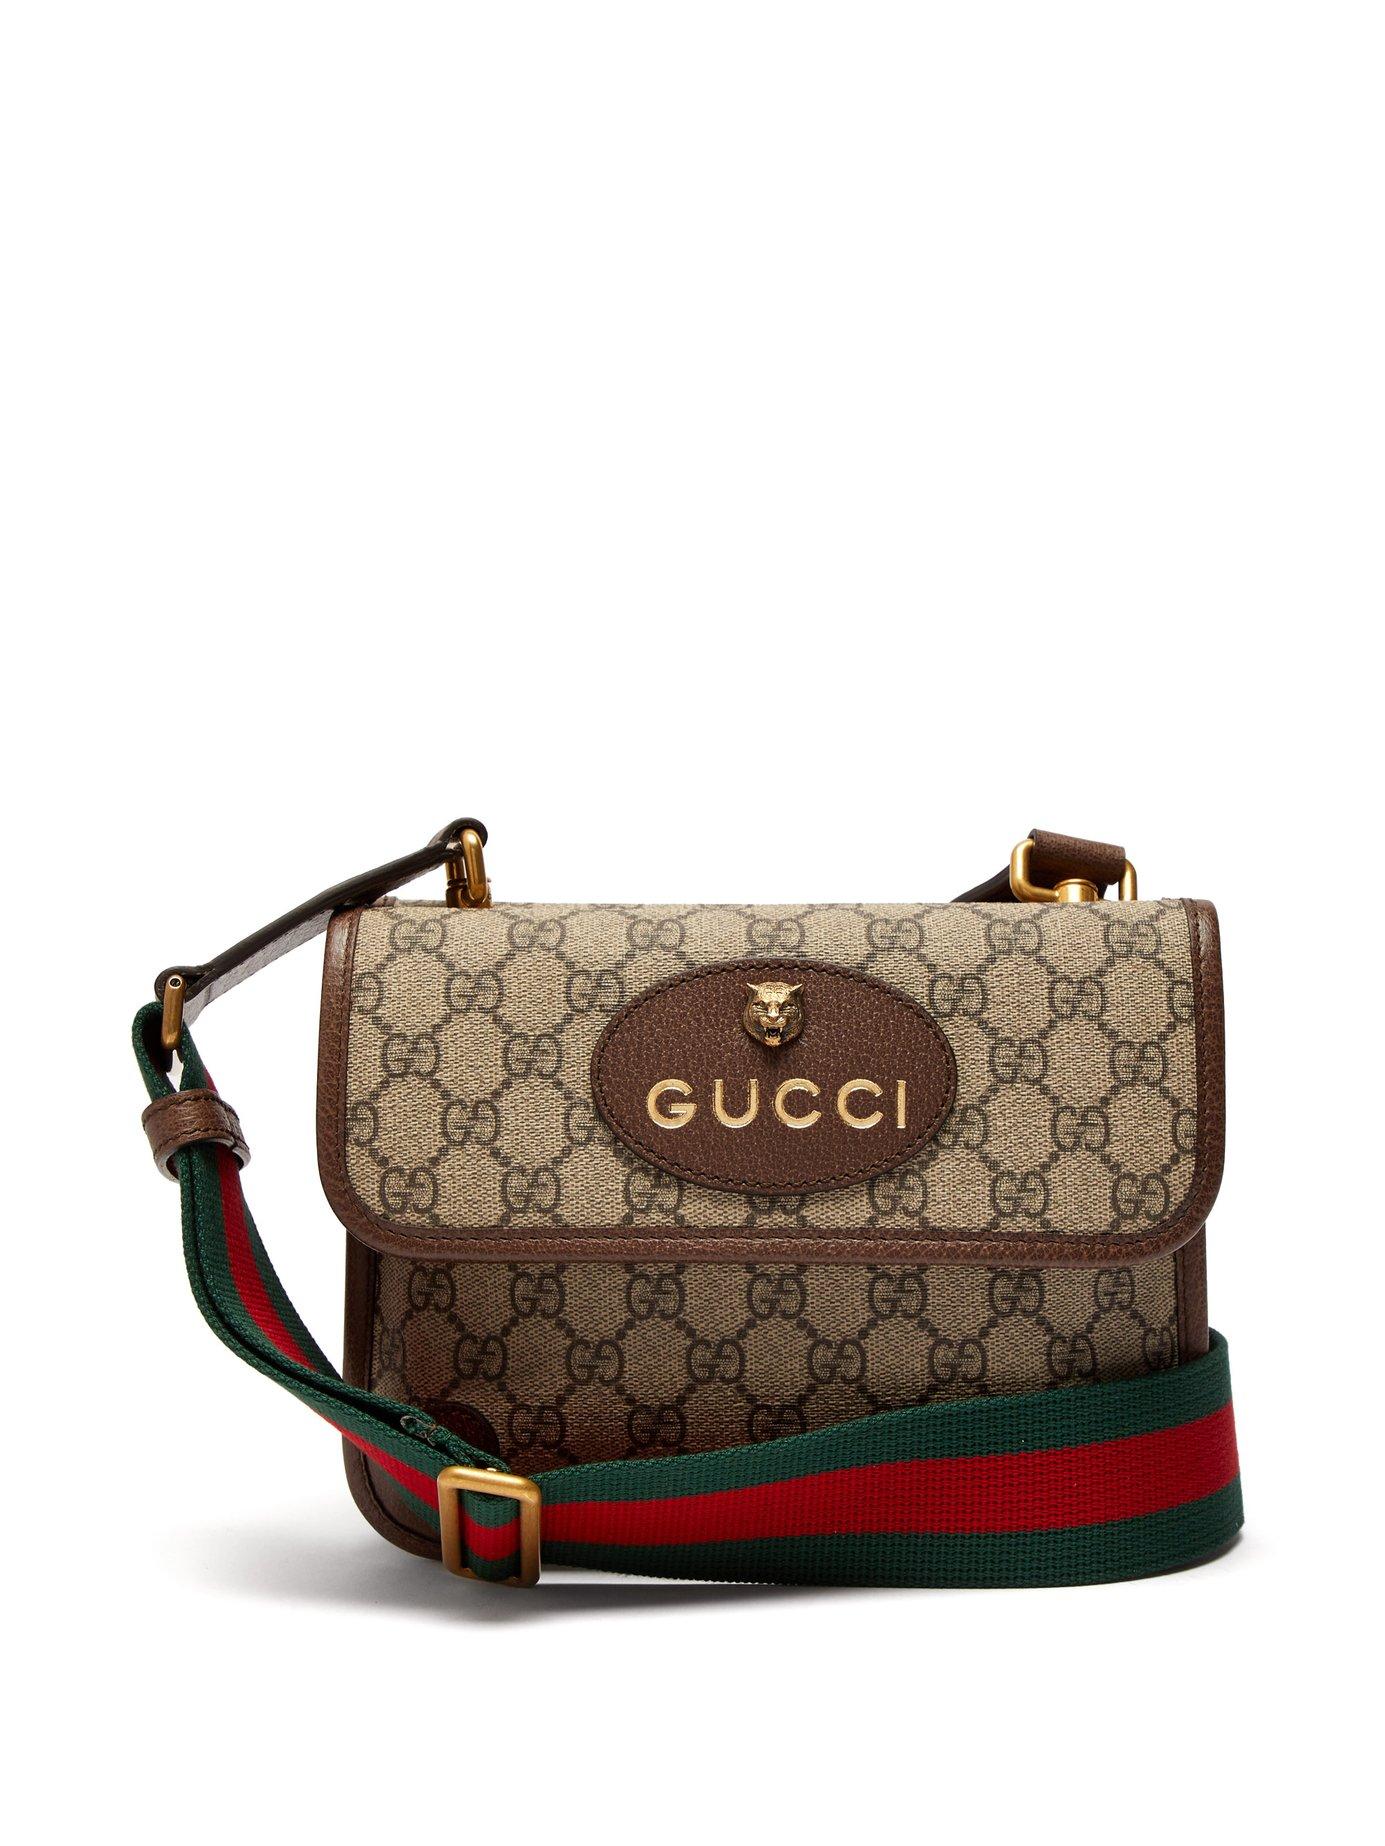 Gucci Gg Supreme Canvas Messenger Bag in Brown for Men - Lyst